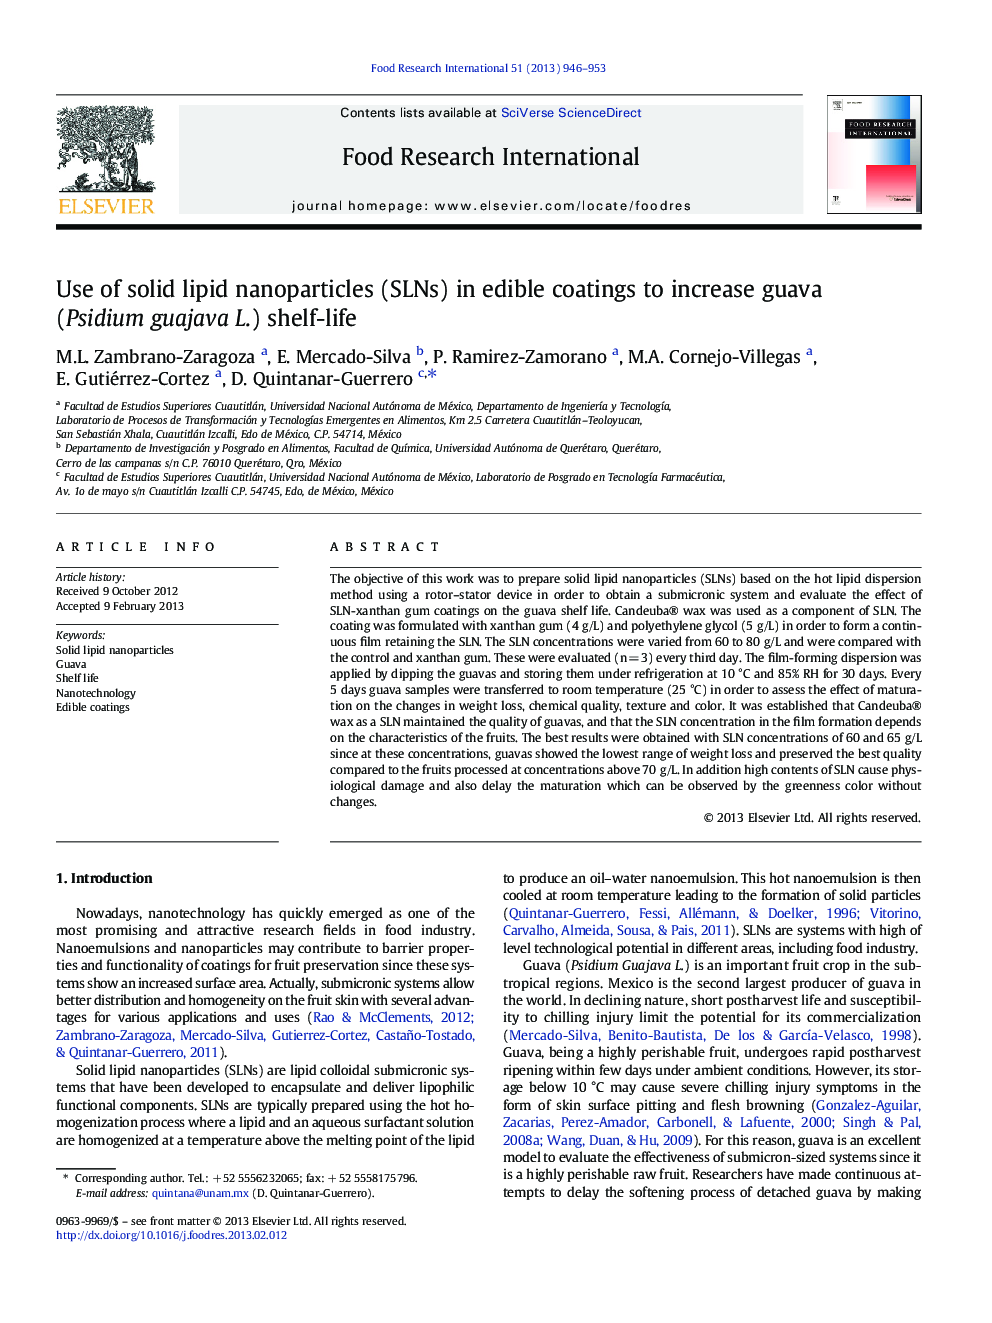 Use of solid lipid nanoparticles (SLNs) in edible coatings to increase guava (Psidium guajava L.) shelf-life